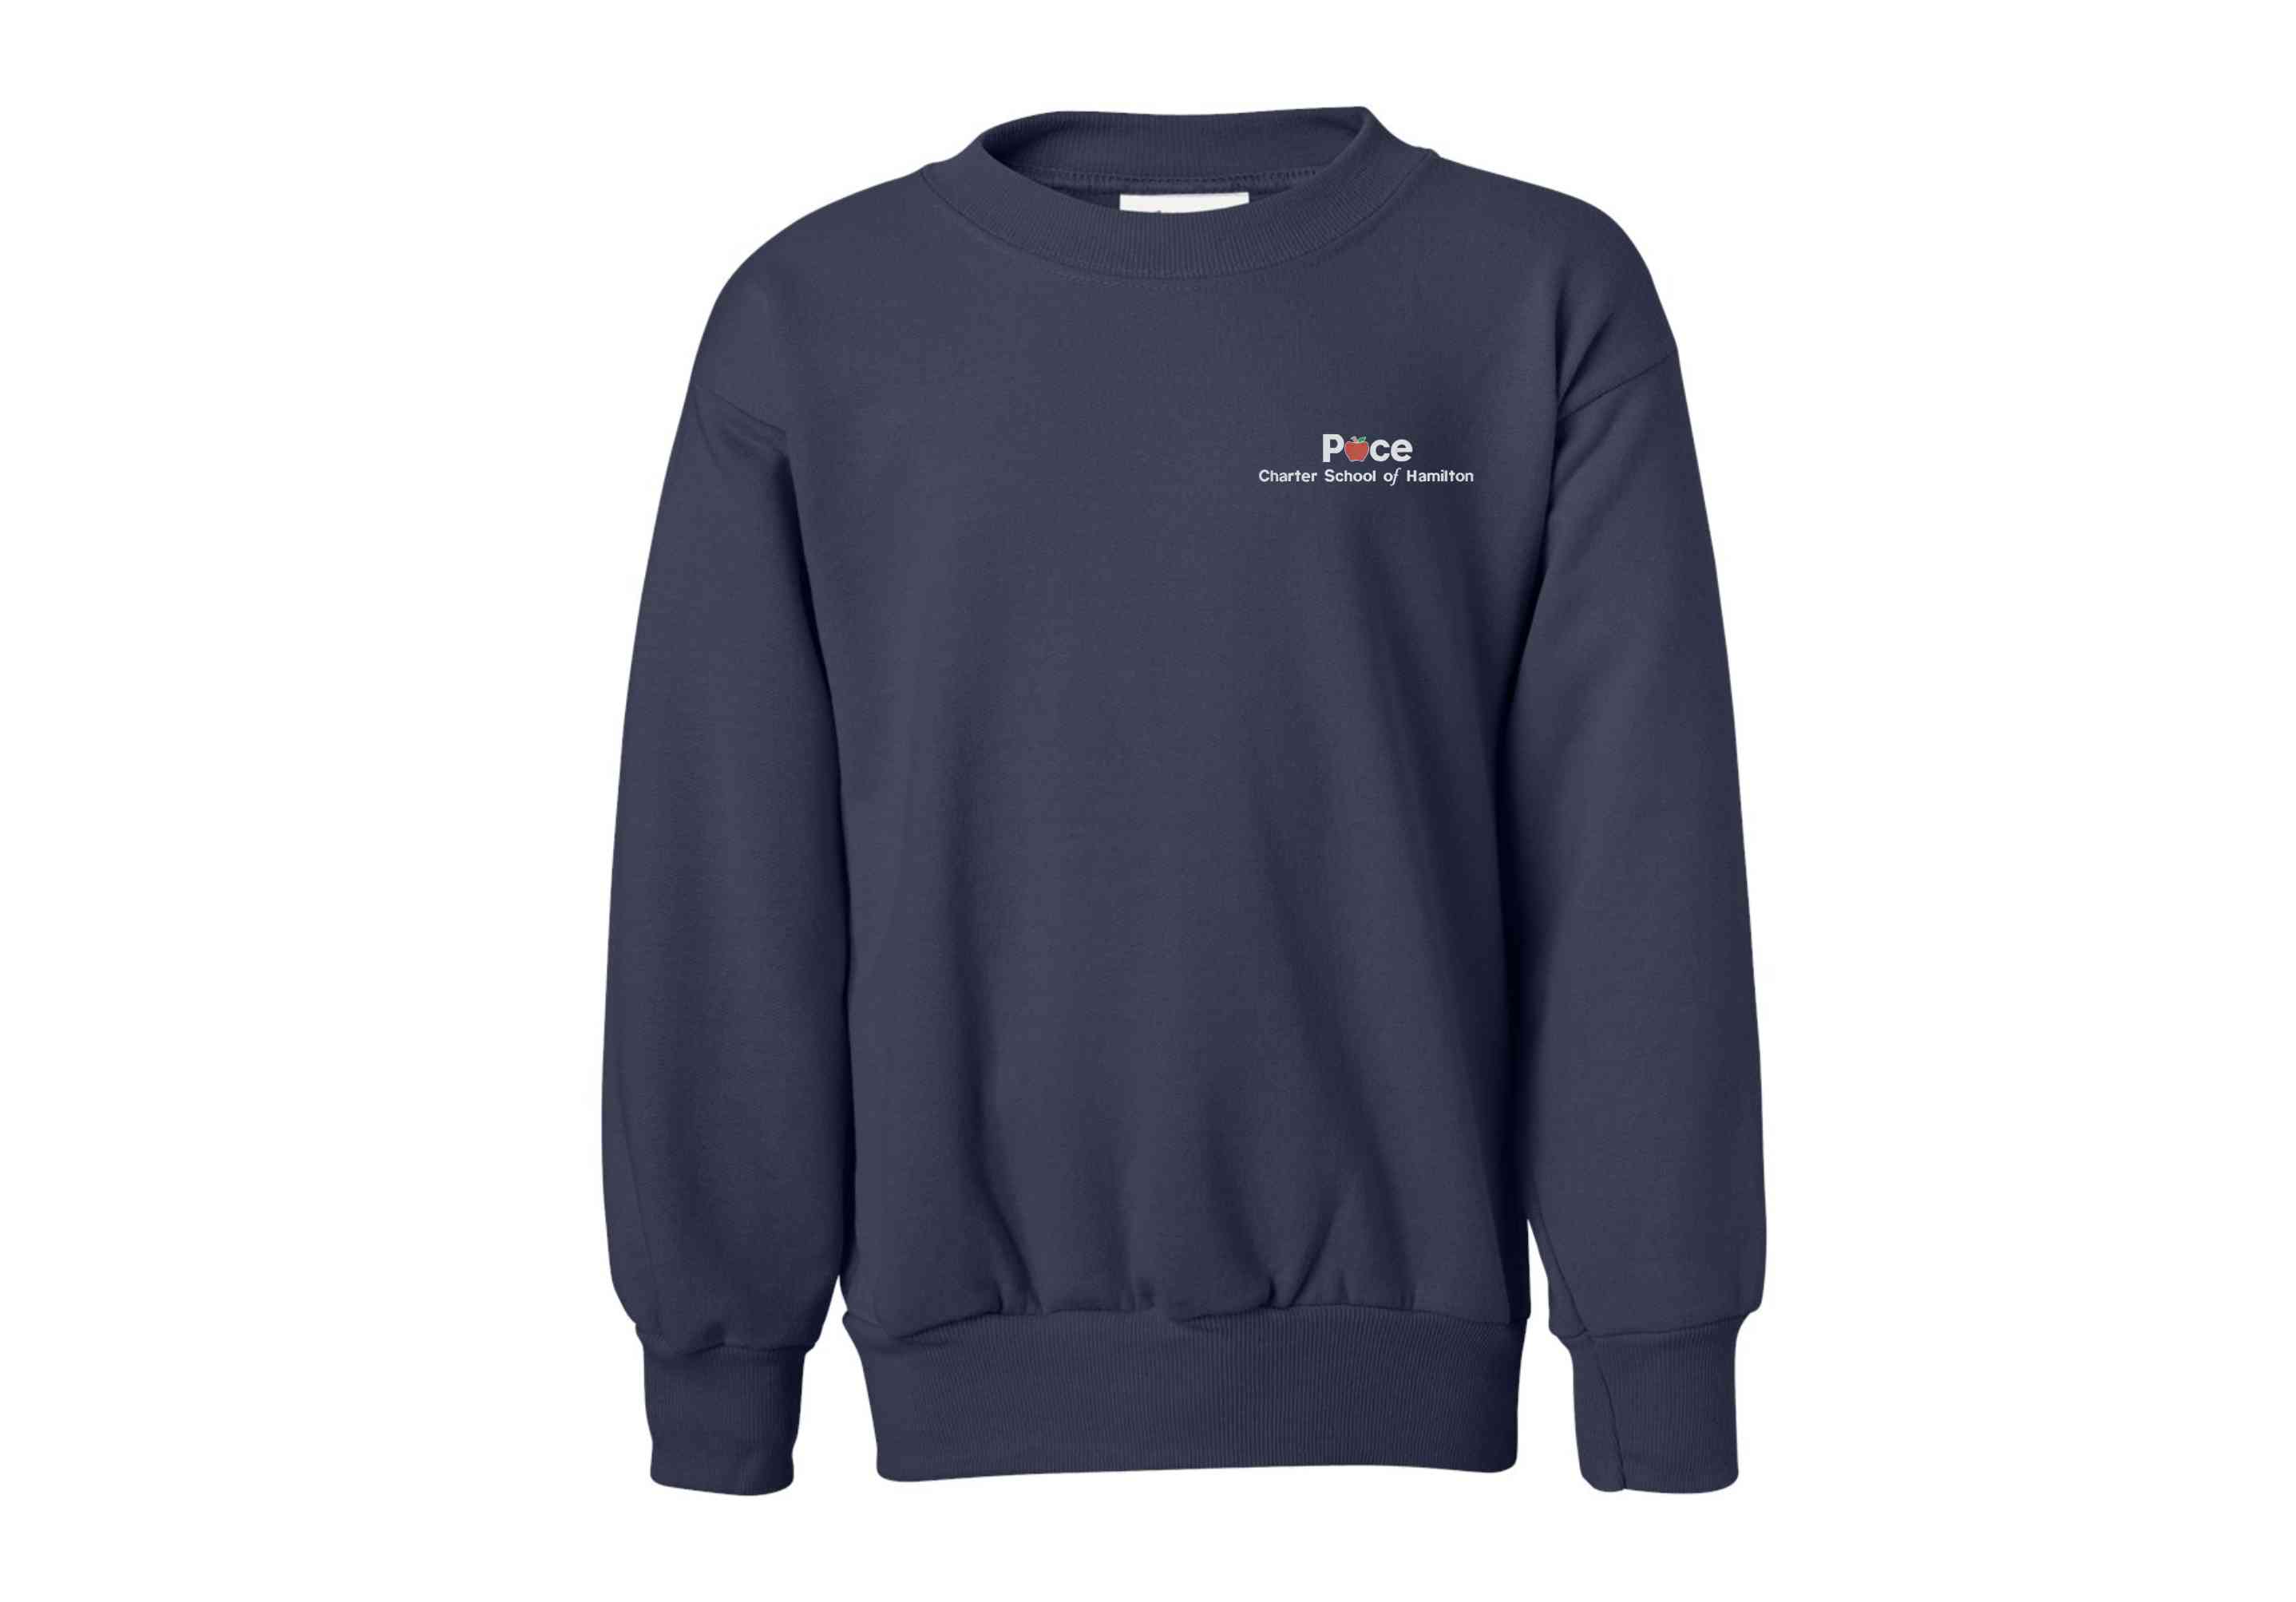 2b-18000 Gym uniform - Embroidered Youth/ Adult Unisex Crewneck Sweatshirt